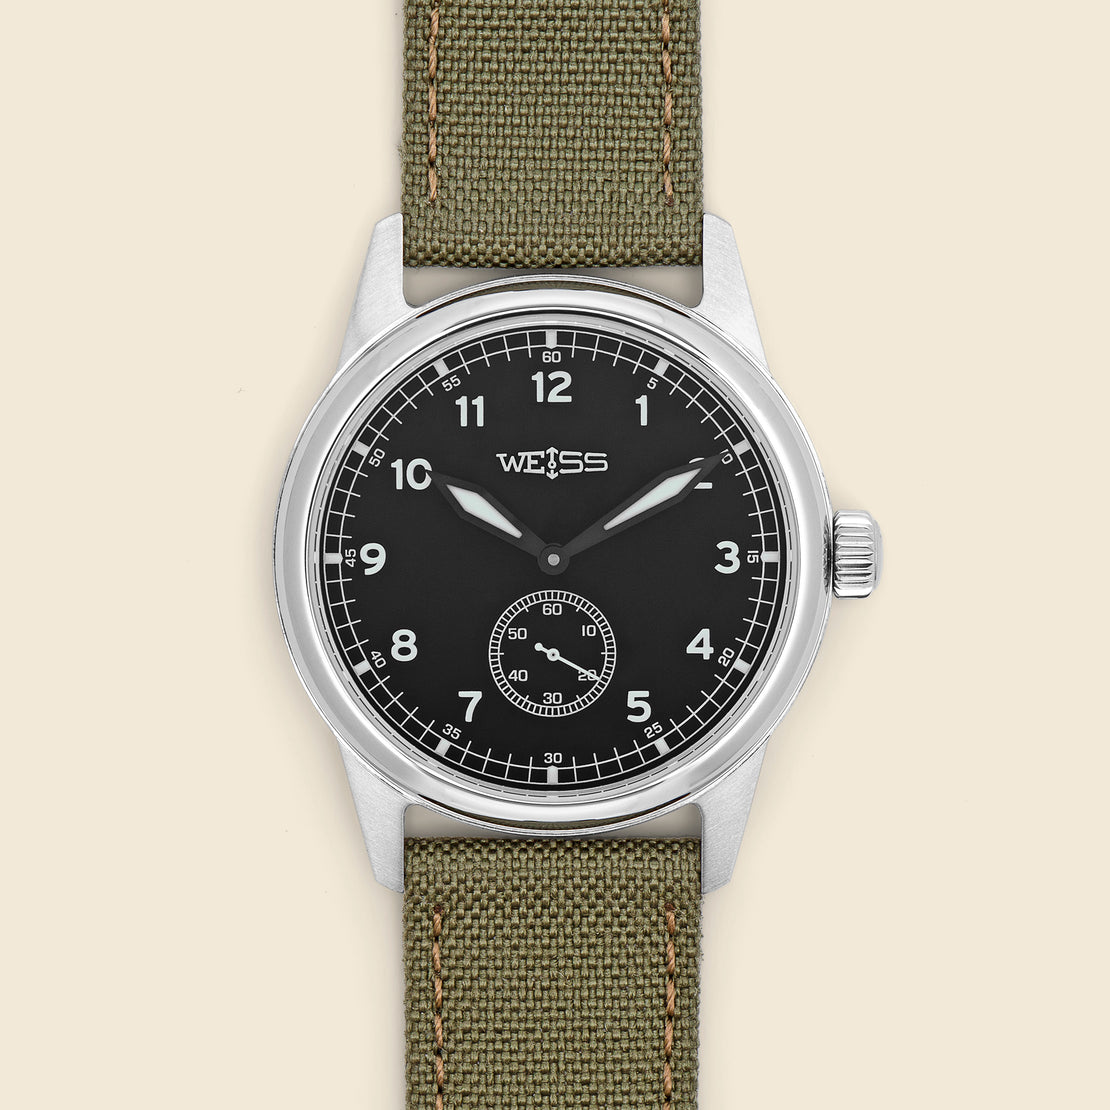 British Cooper general waterproof, 100m quartz military watch Pathfinder  military standard